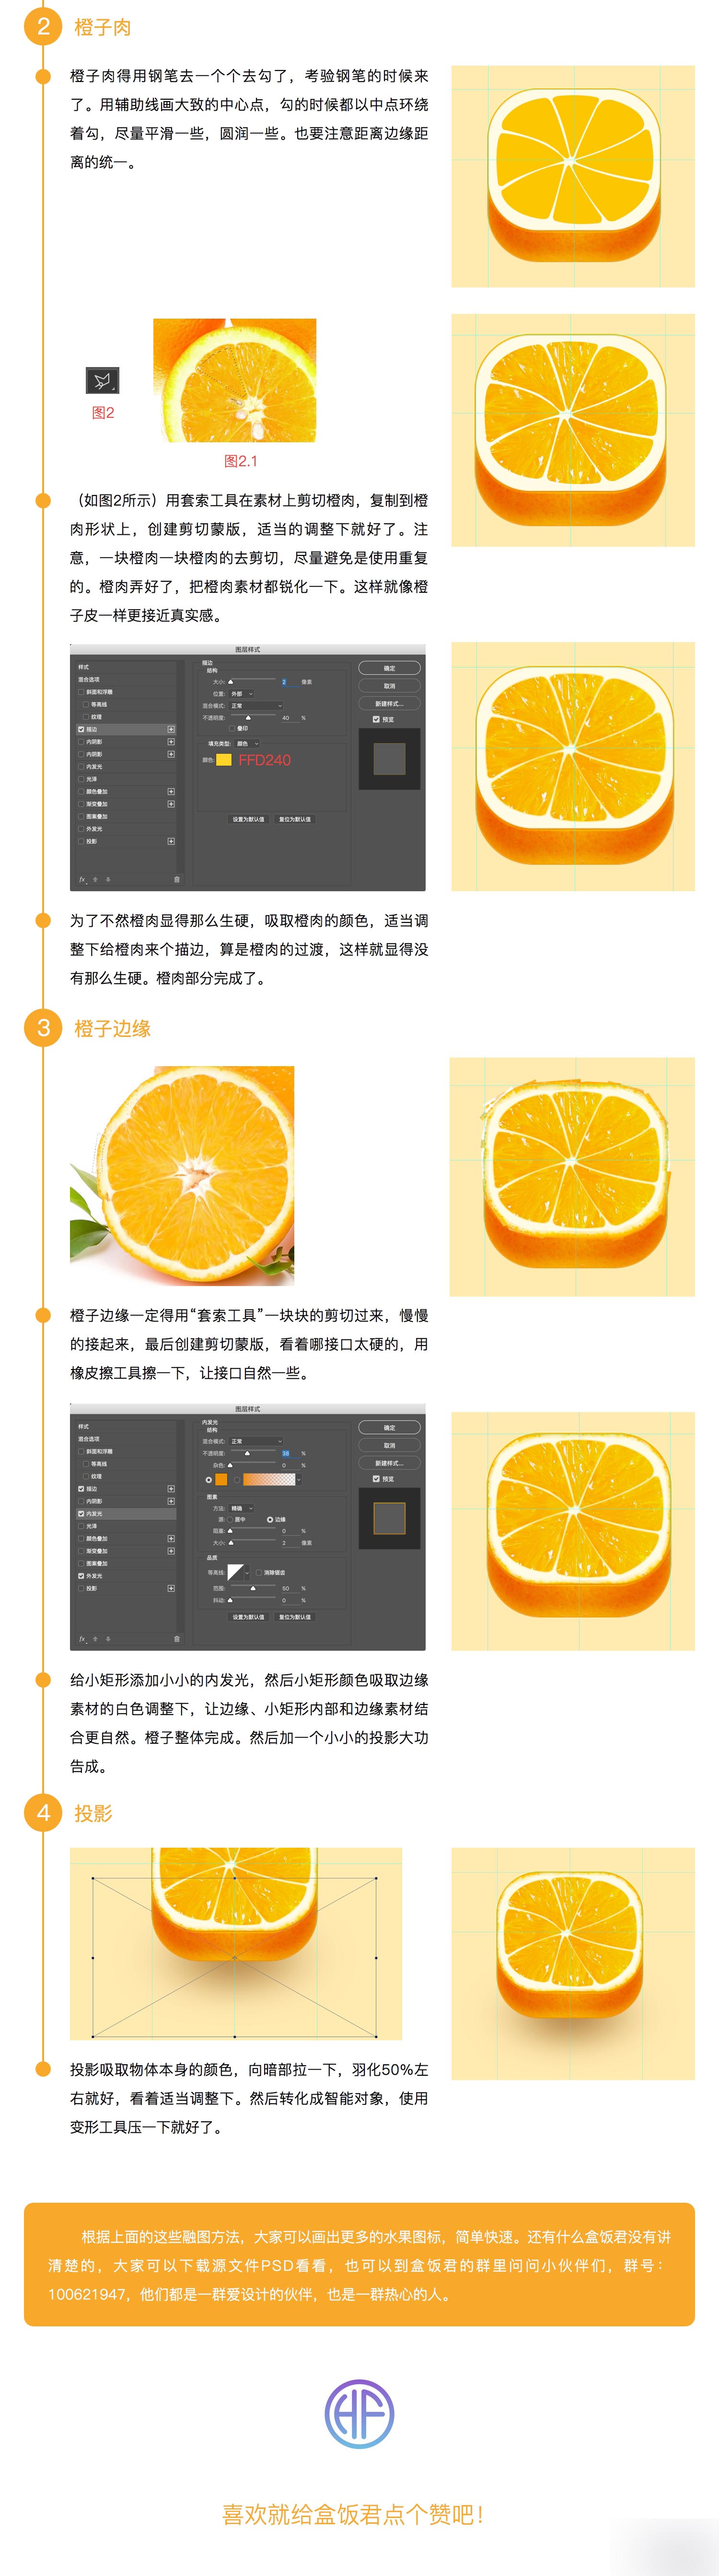 PS鼠绘非常有创意逼真的橙子APP图标